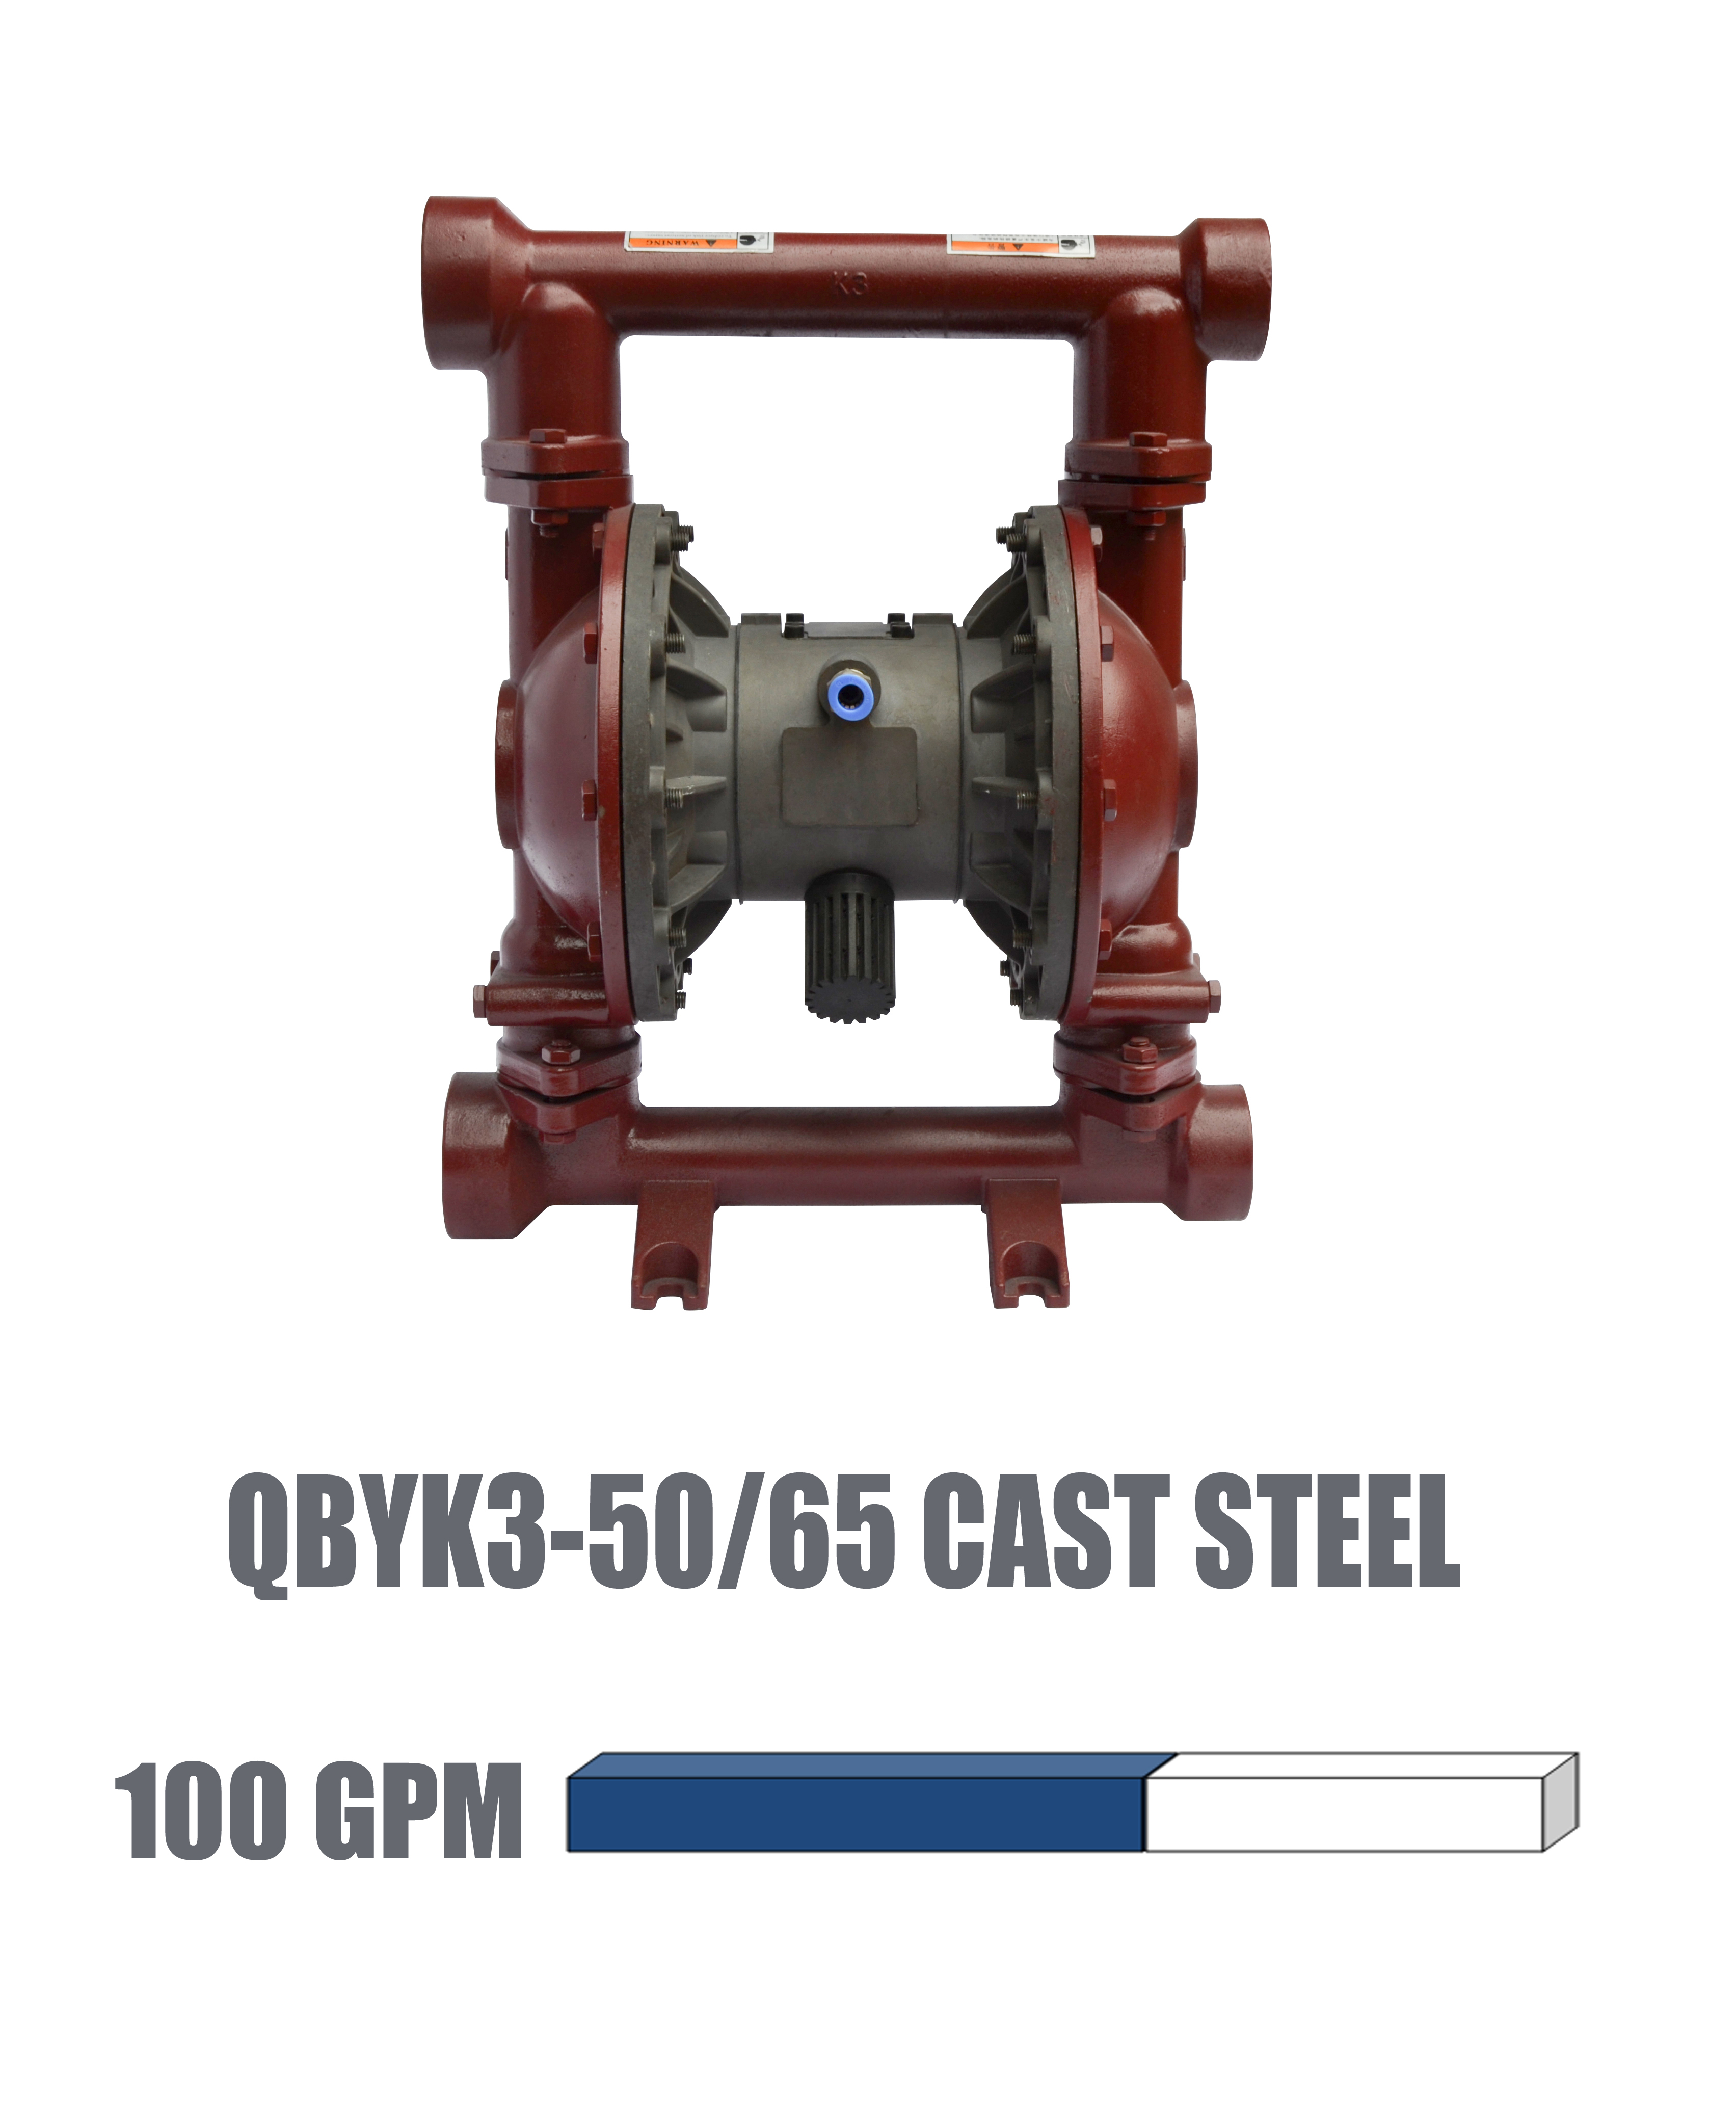 QBYK3-50/65 Cast steel